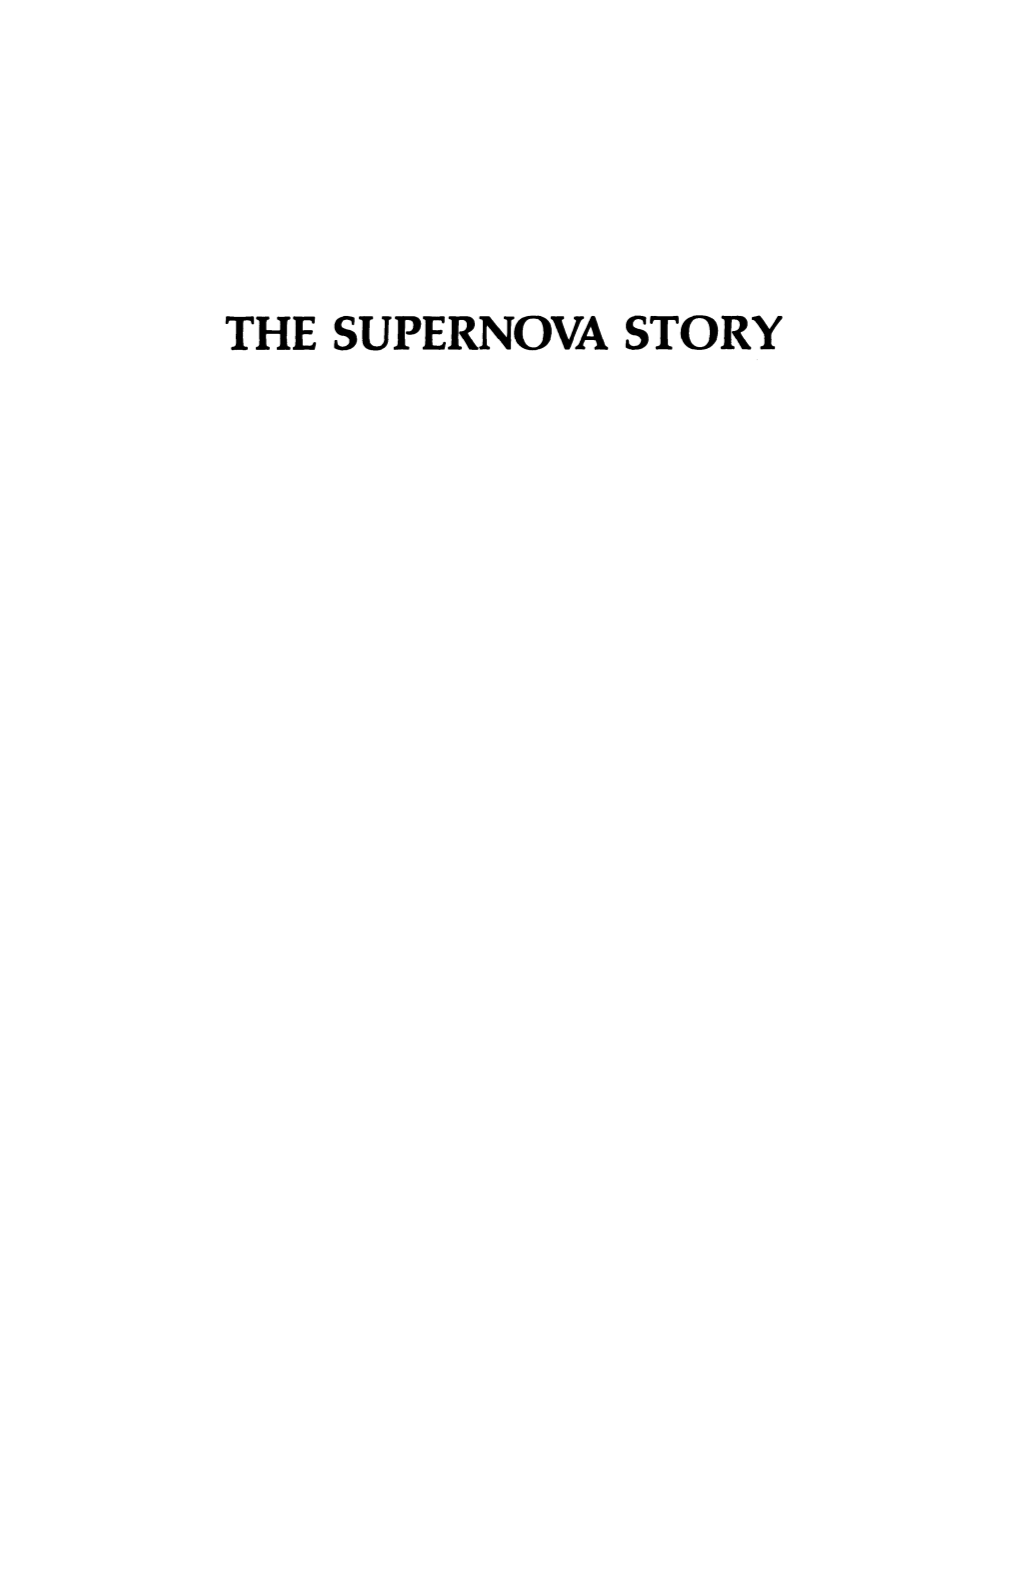 The Supernova Story the Supernova Story